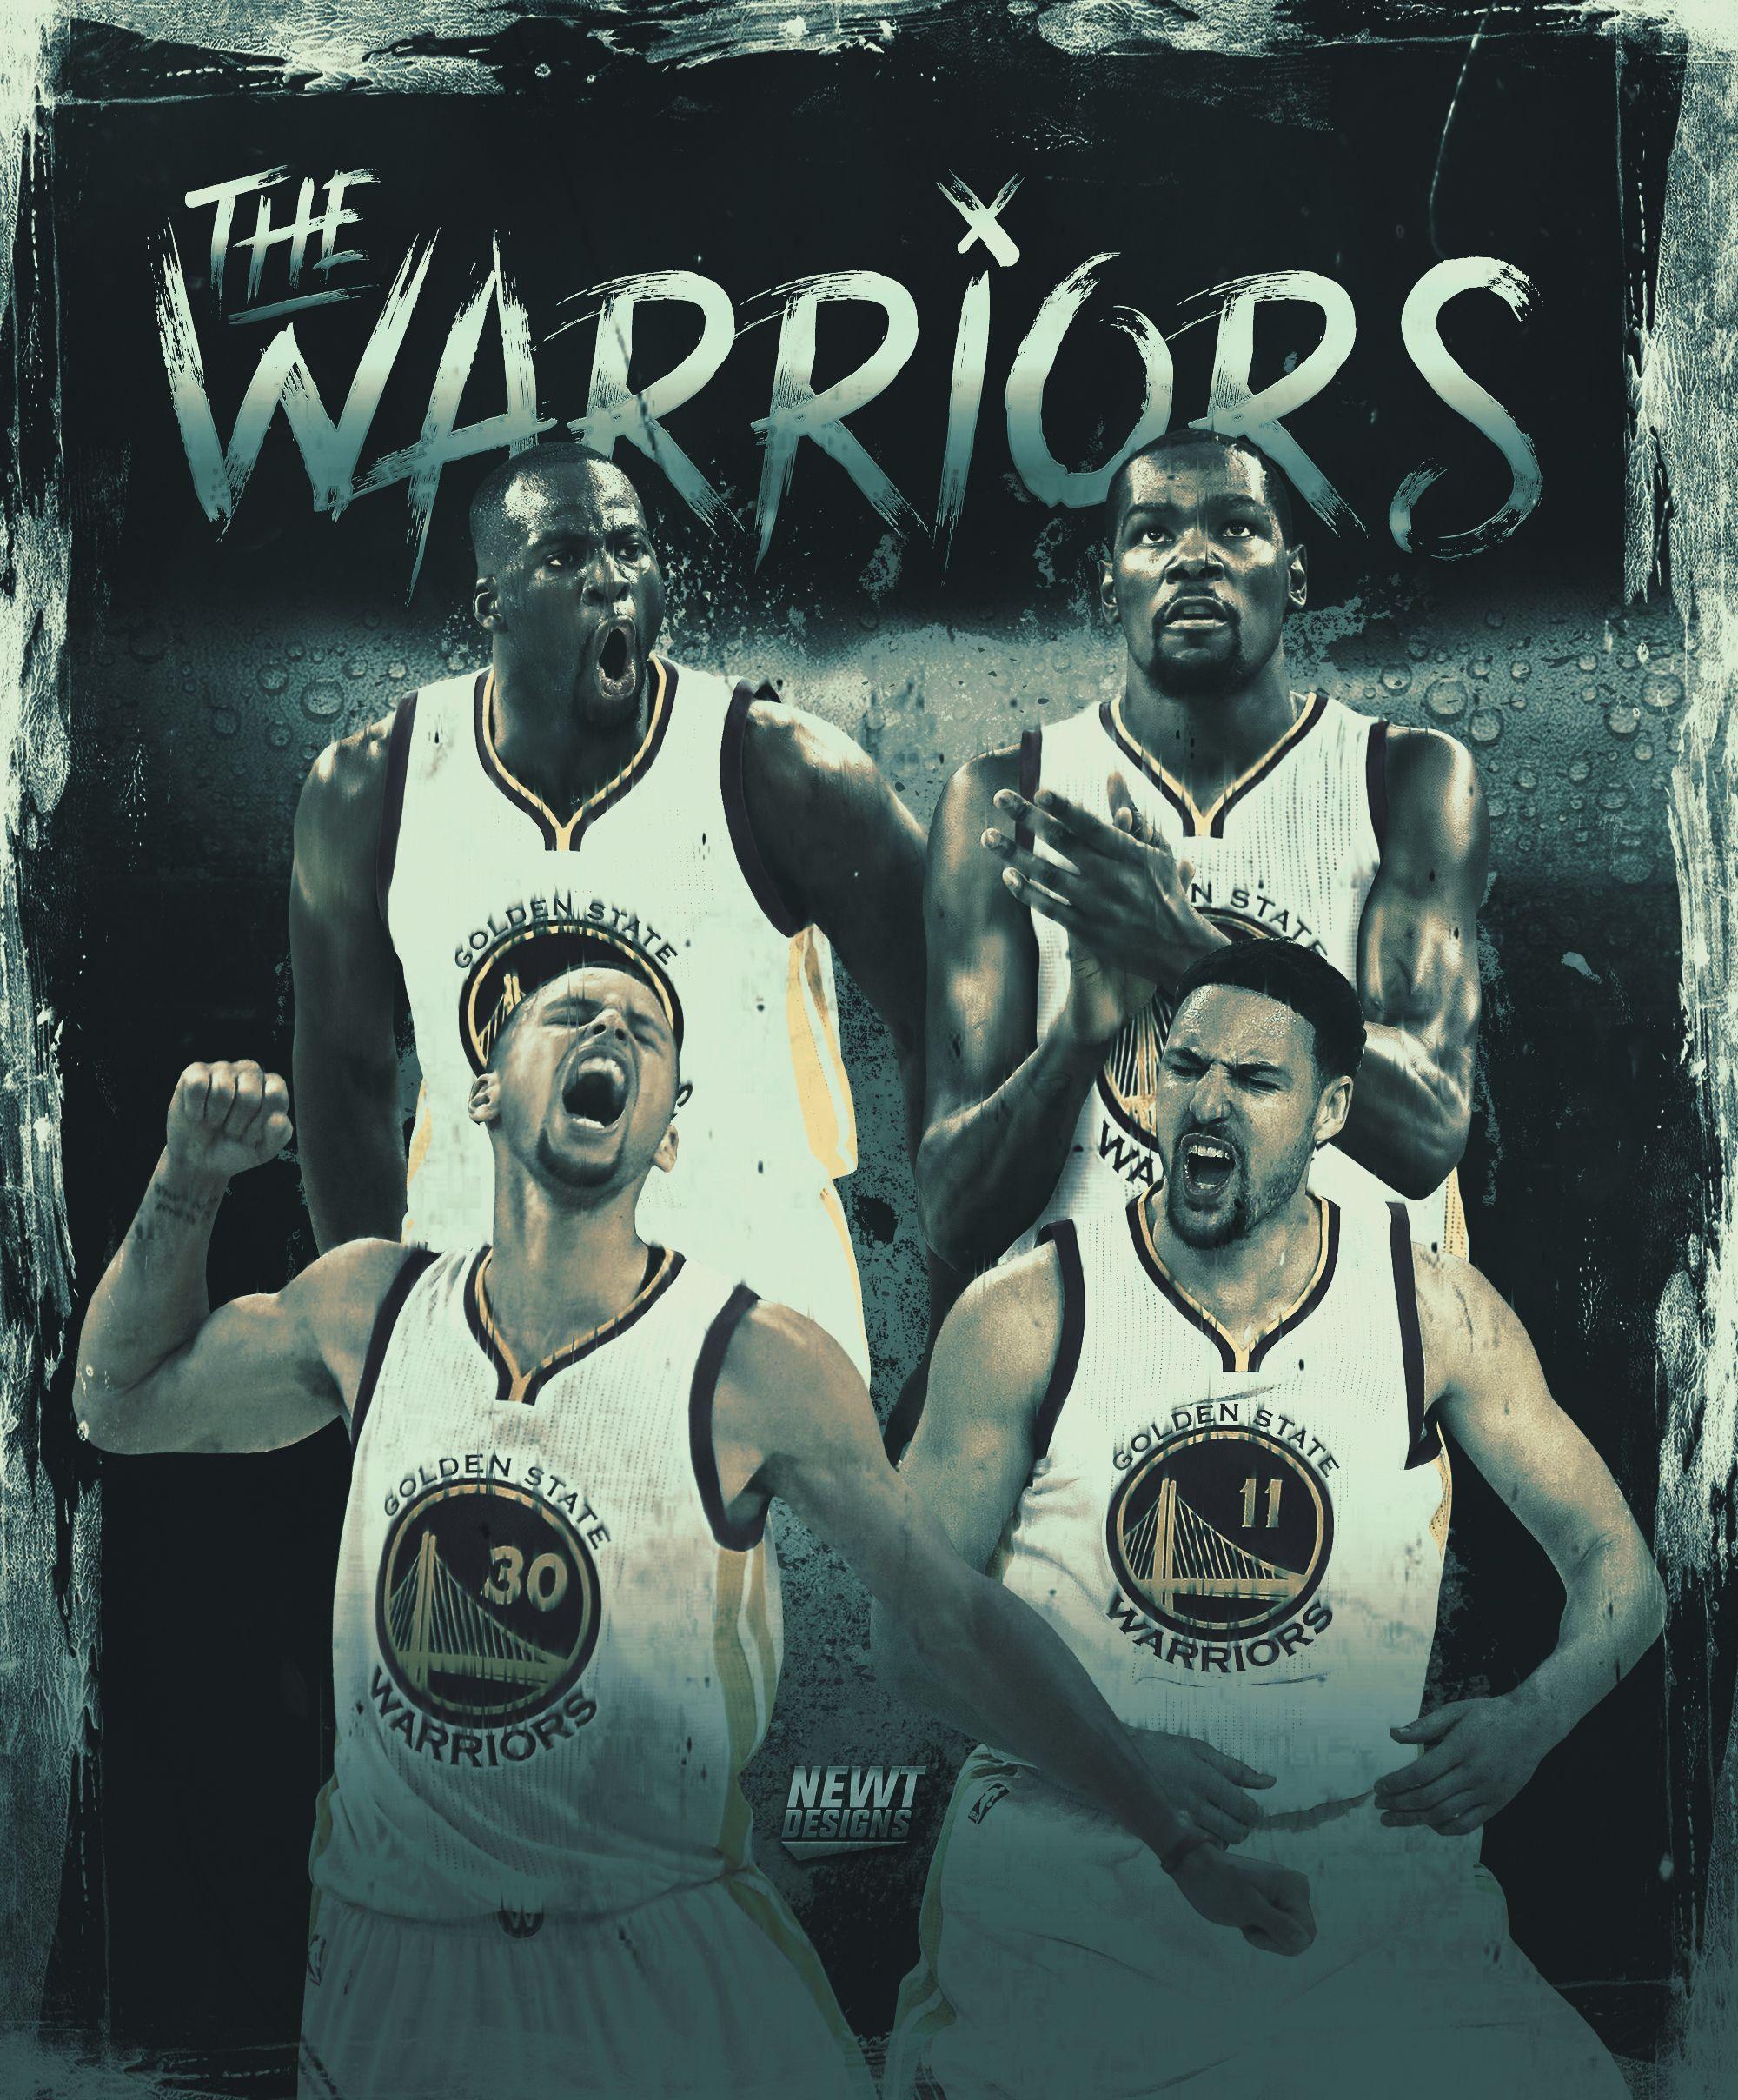 The Golden State Warriors Poster V2